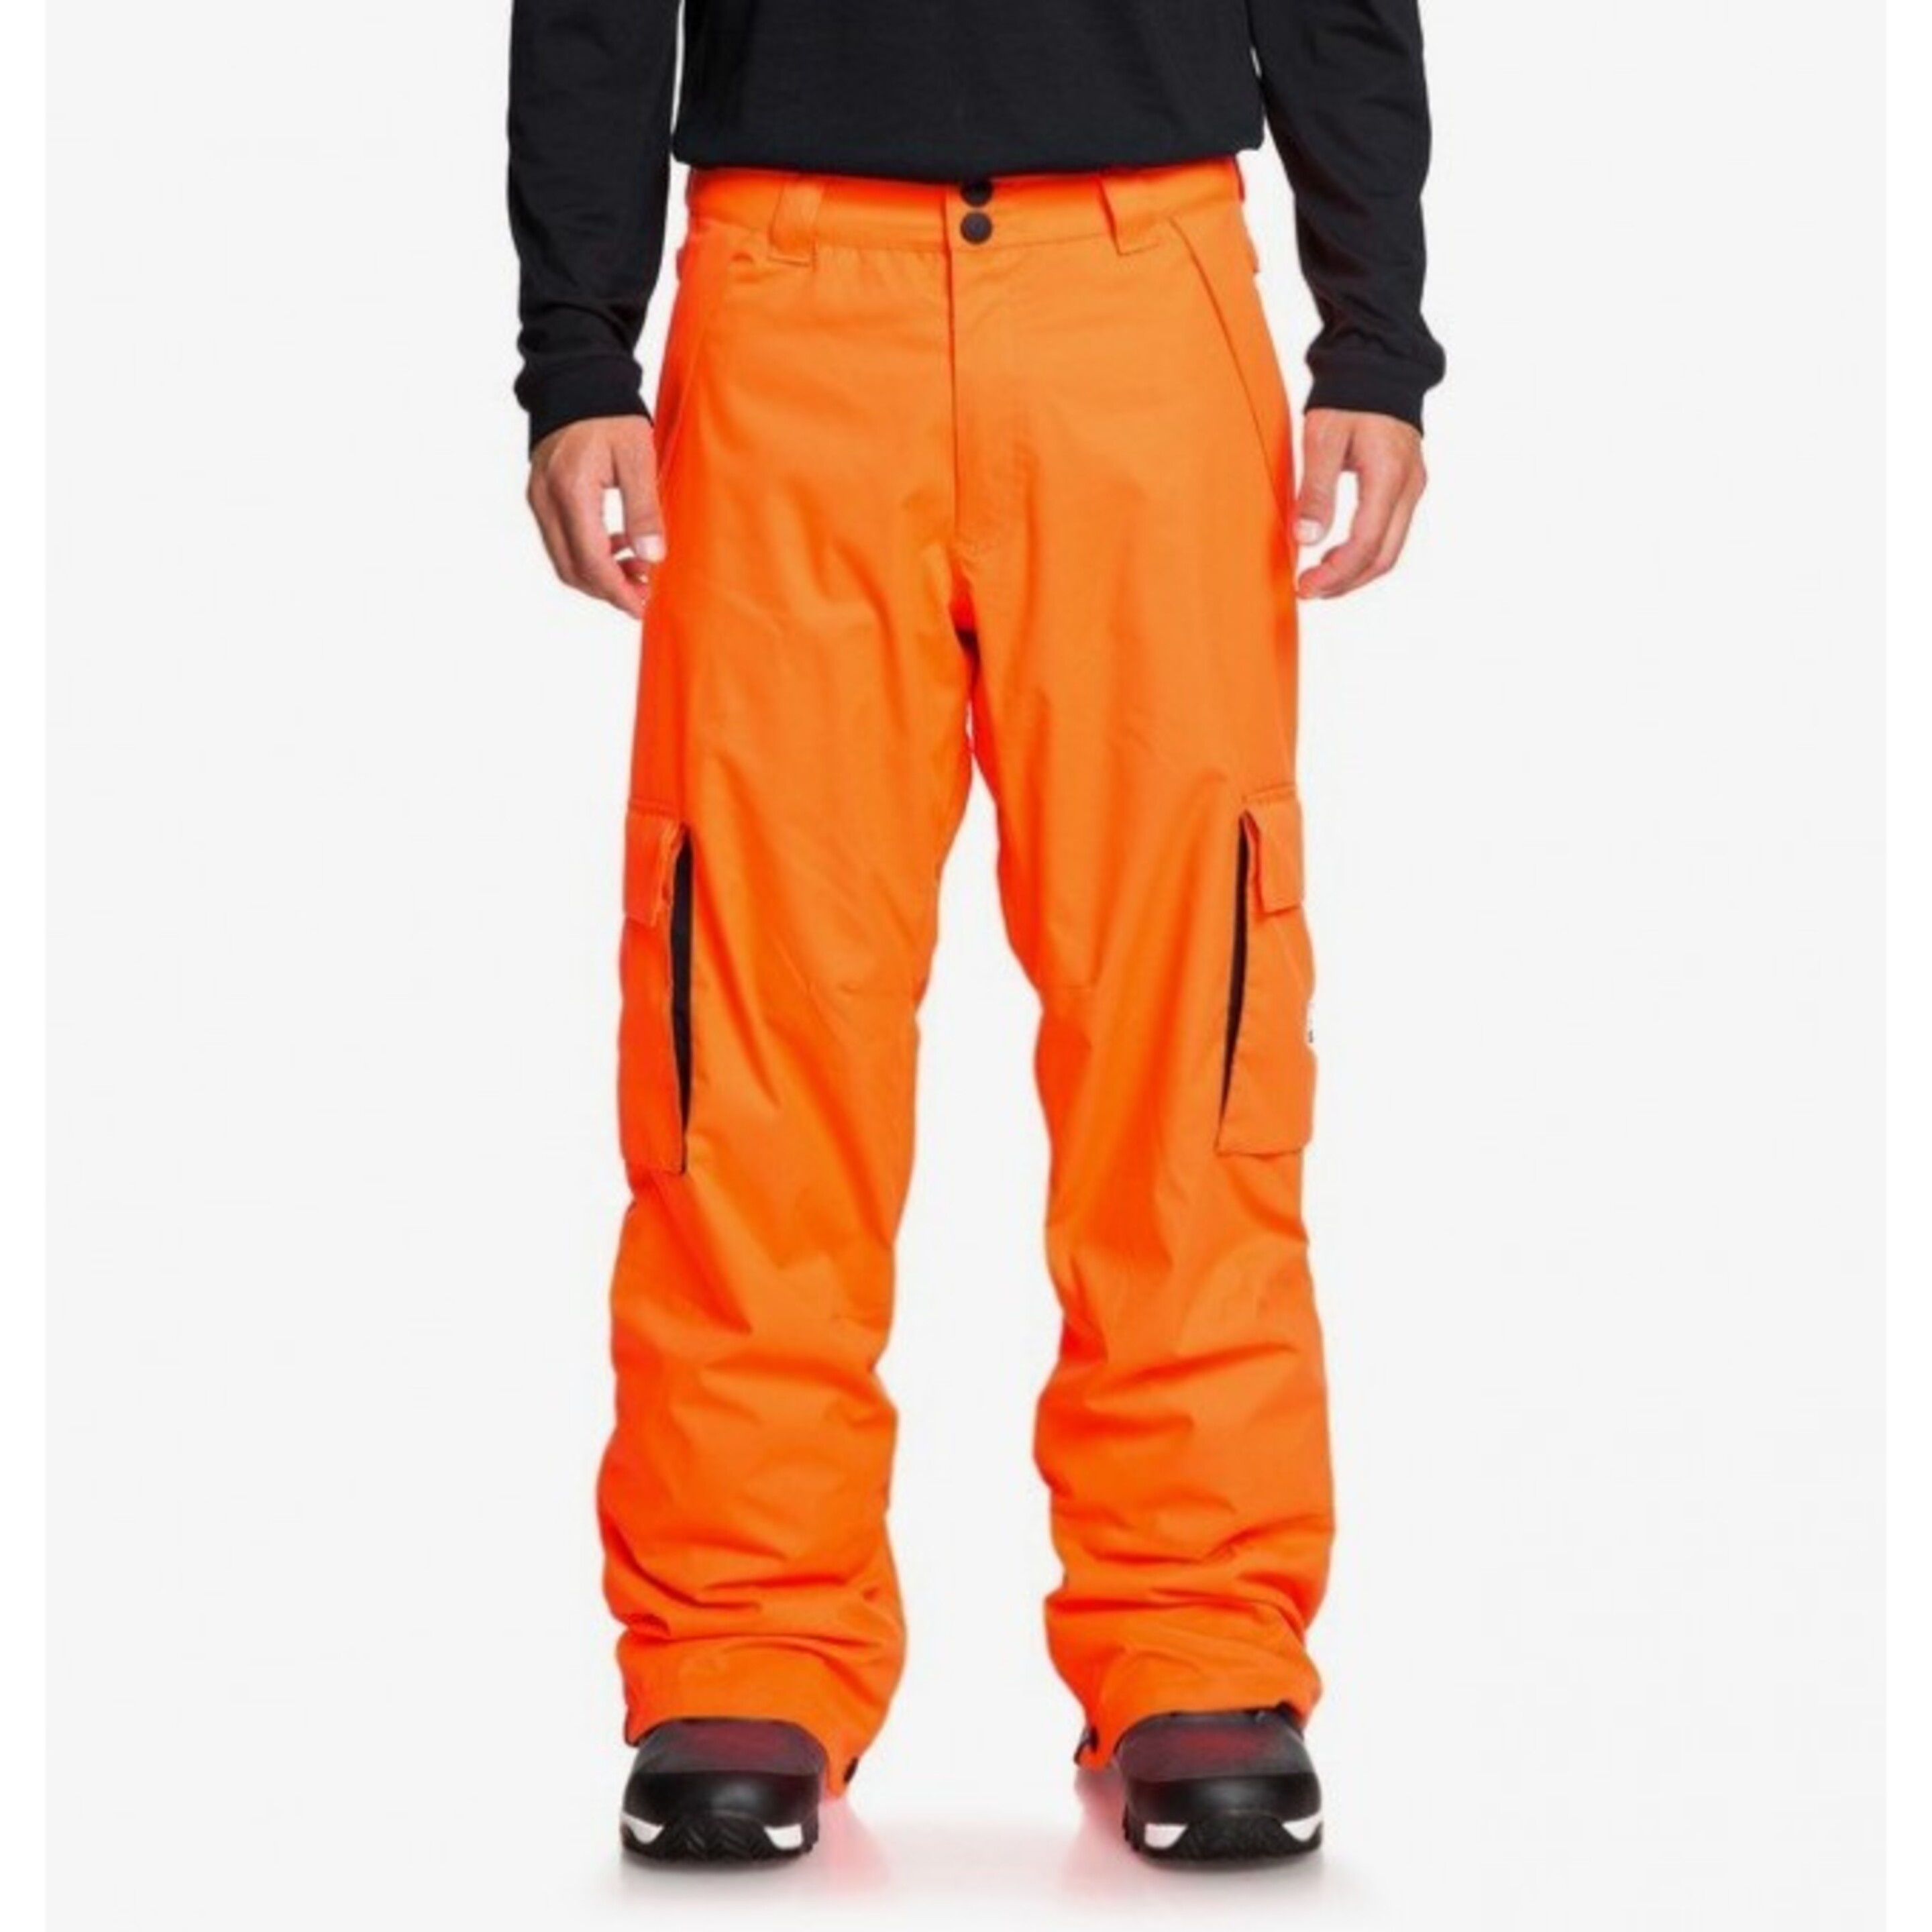 Pantalon De Nieve Dc Shoes Banshee Naranja